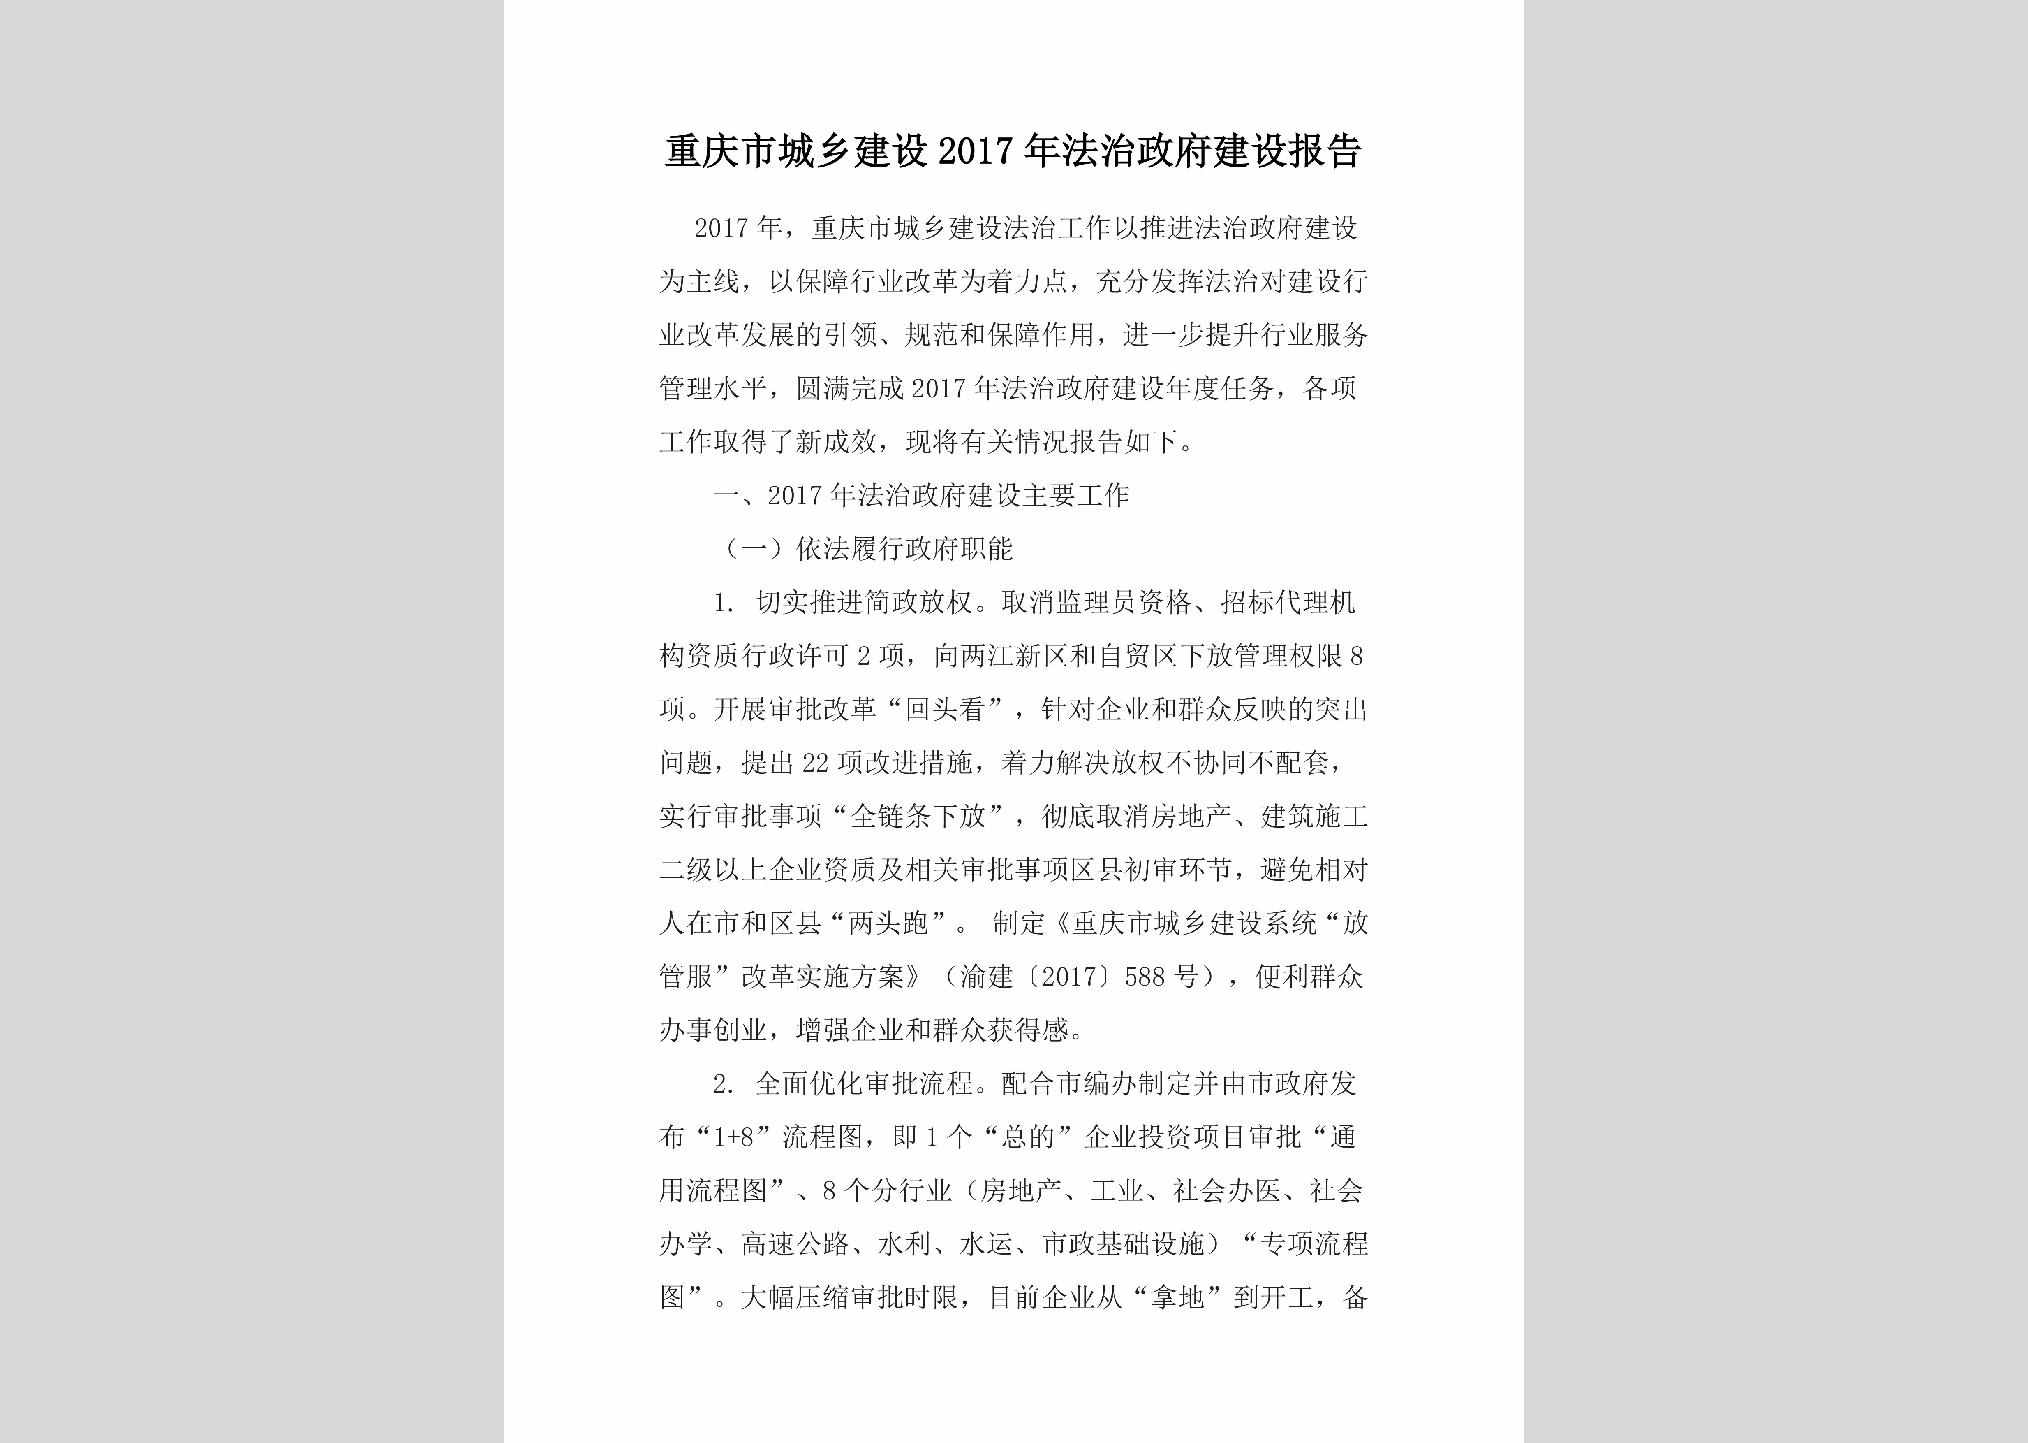 CQ-CXJSFZZF-2018：重庆市城乡建设2017年法治政府建设报告